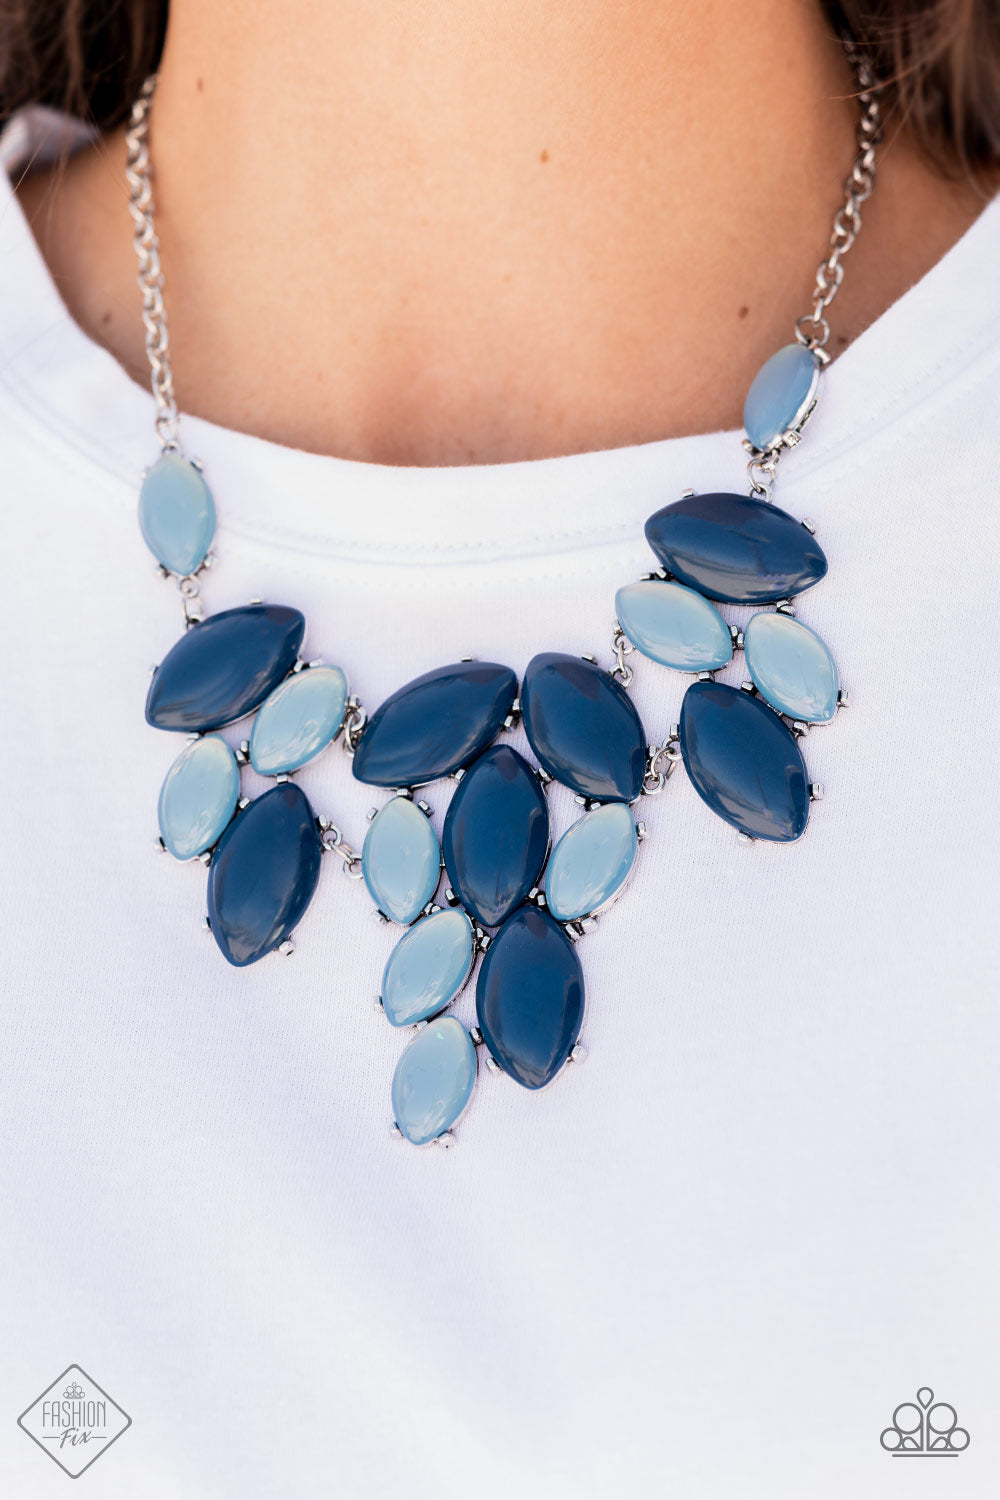 Date Night Nouveau - Blue necklace (October 2021 - Fashion Fix)